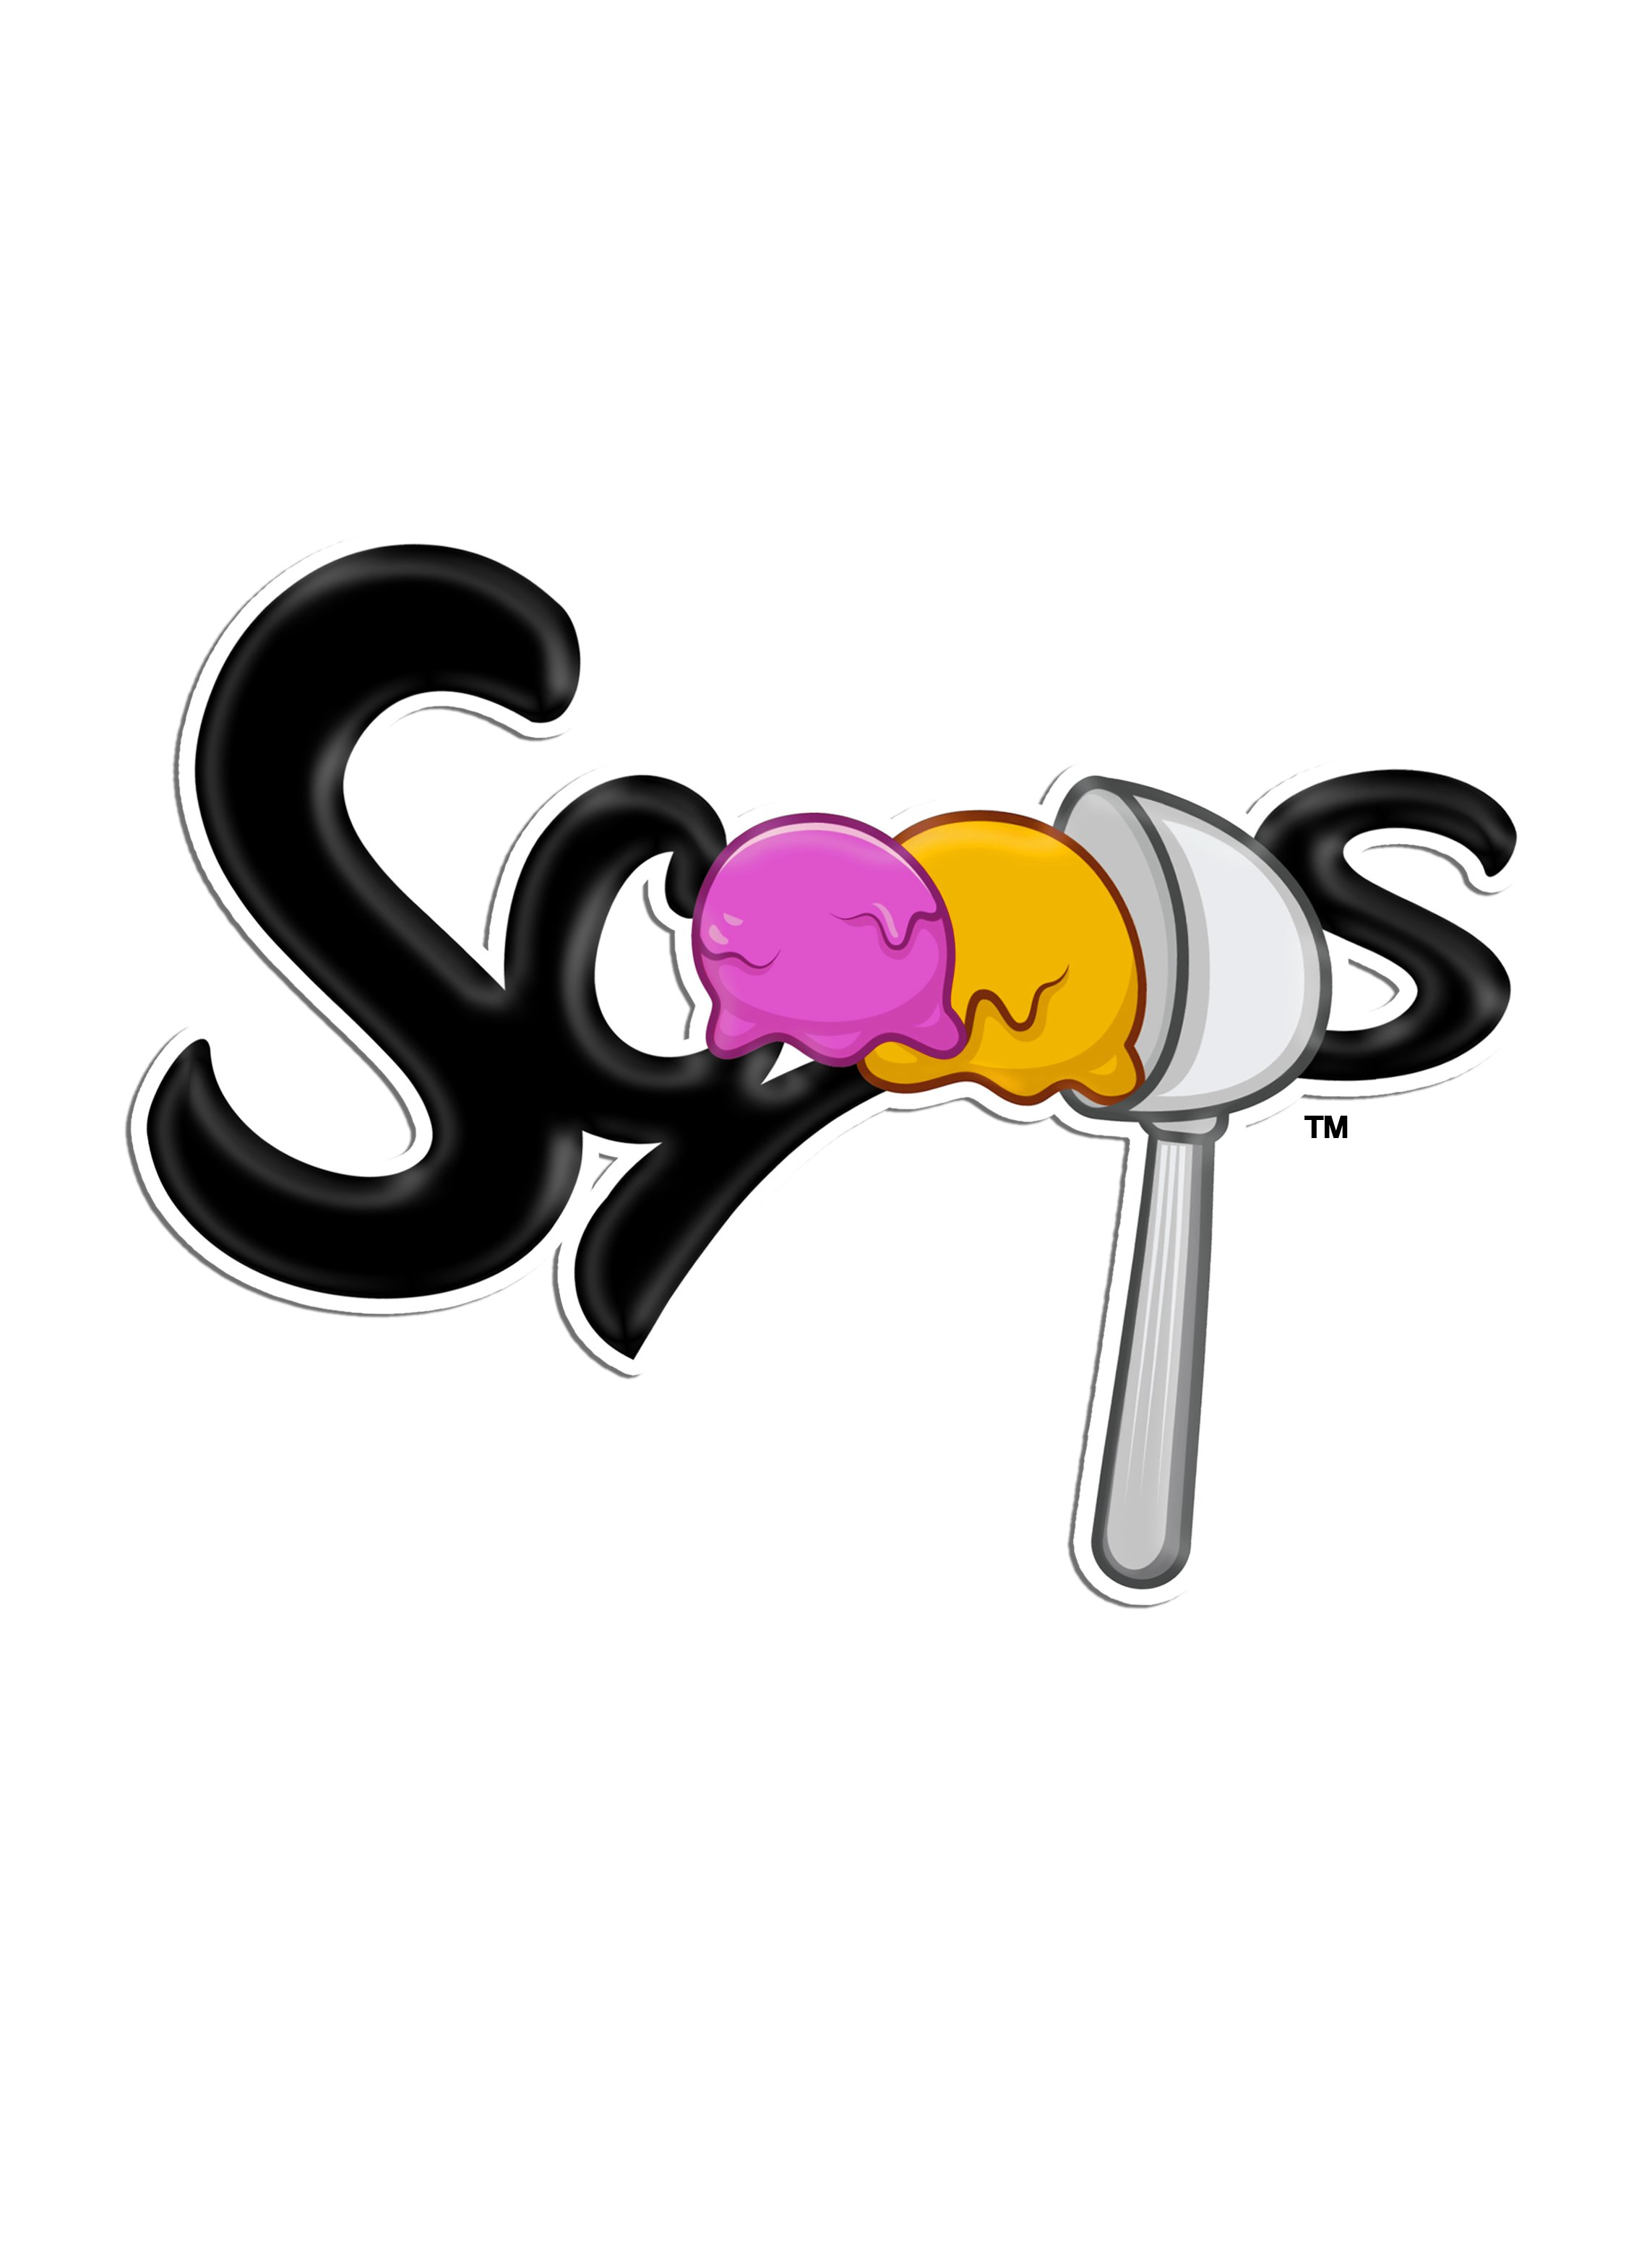 Trademark Logo SCOOPS